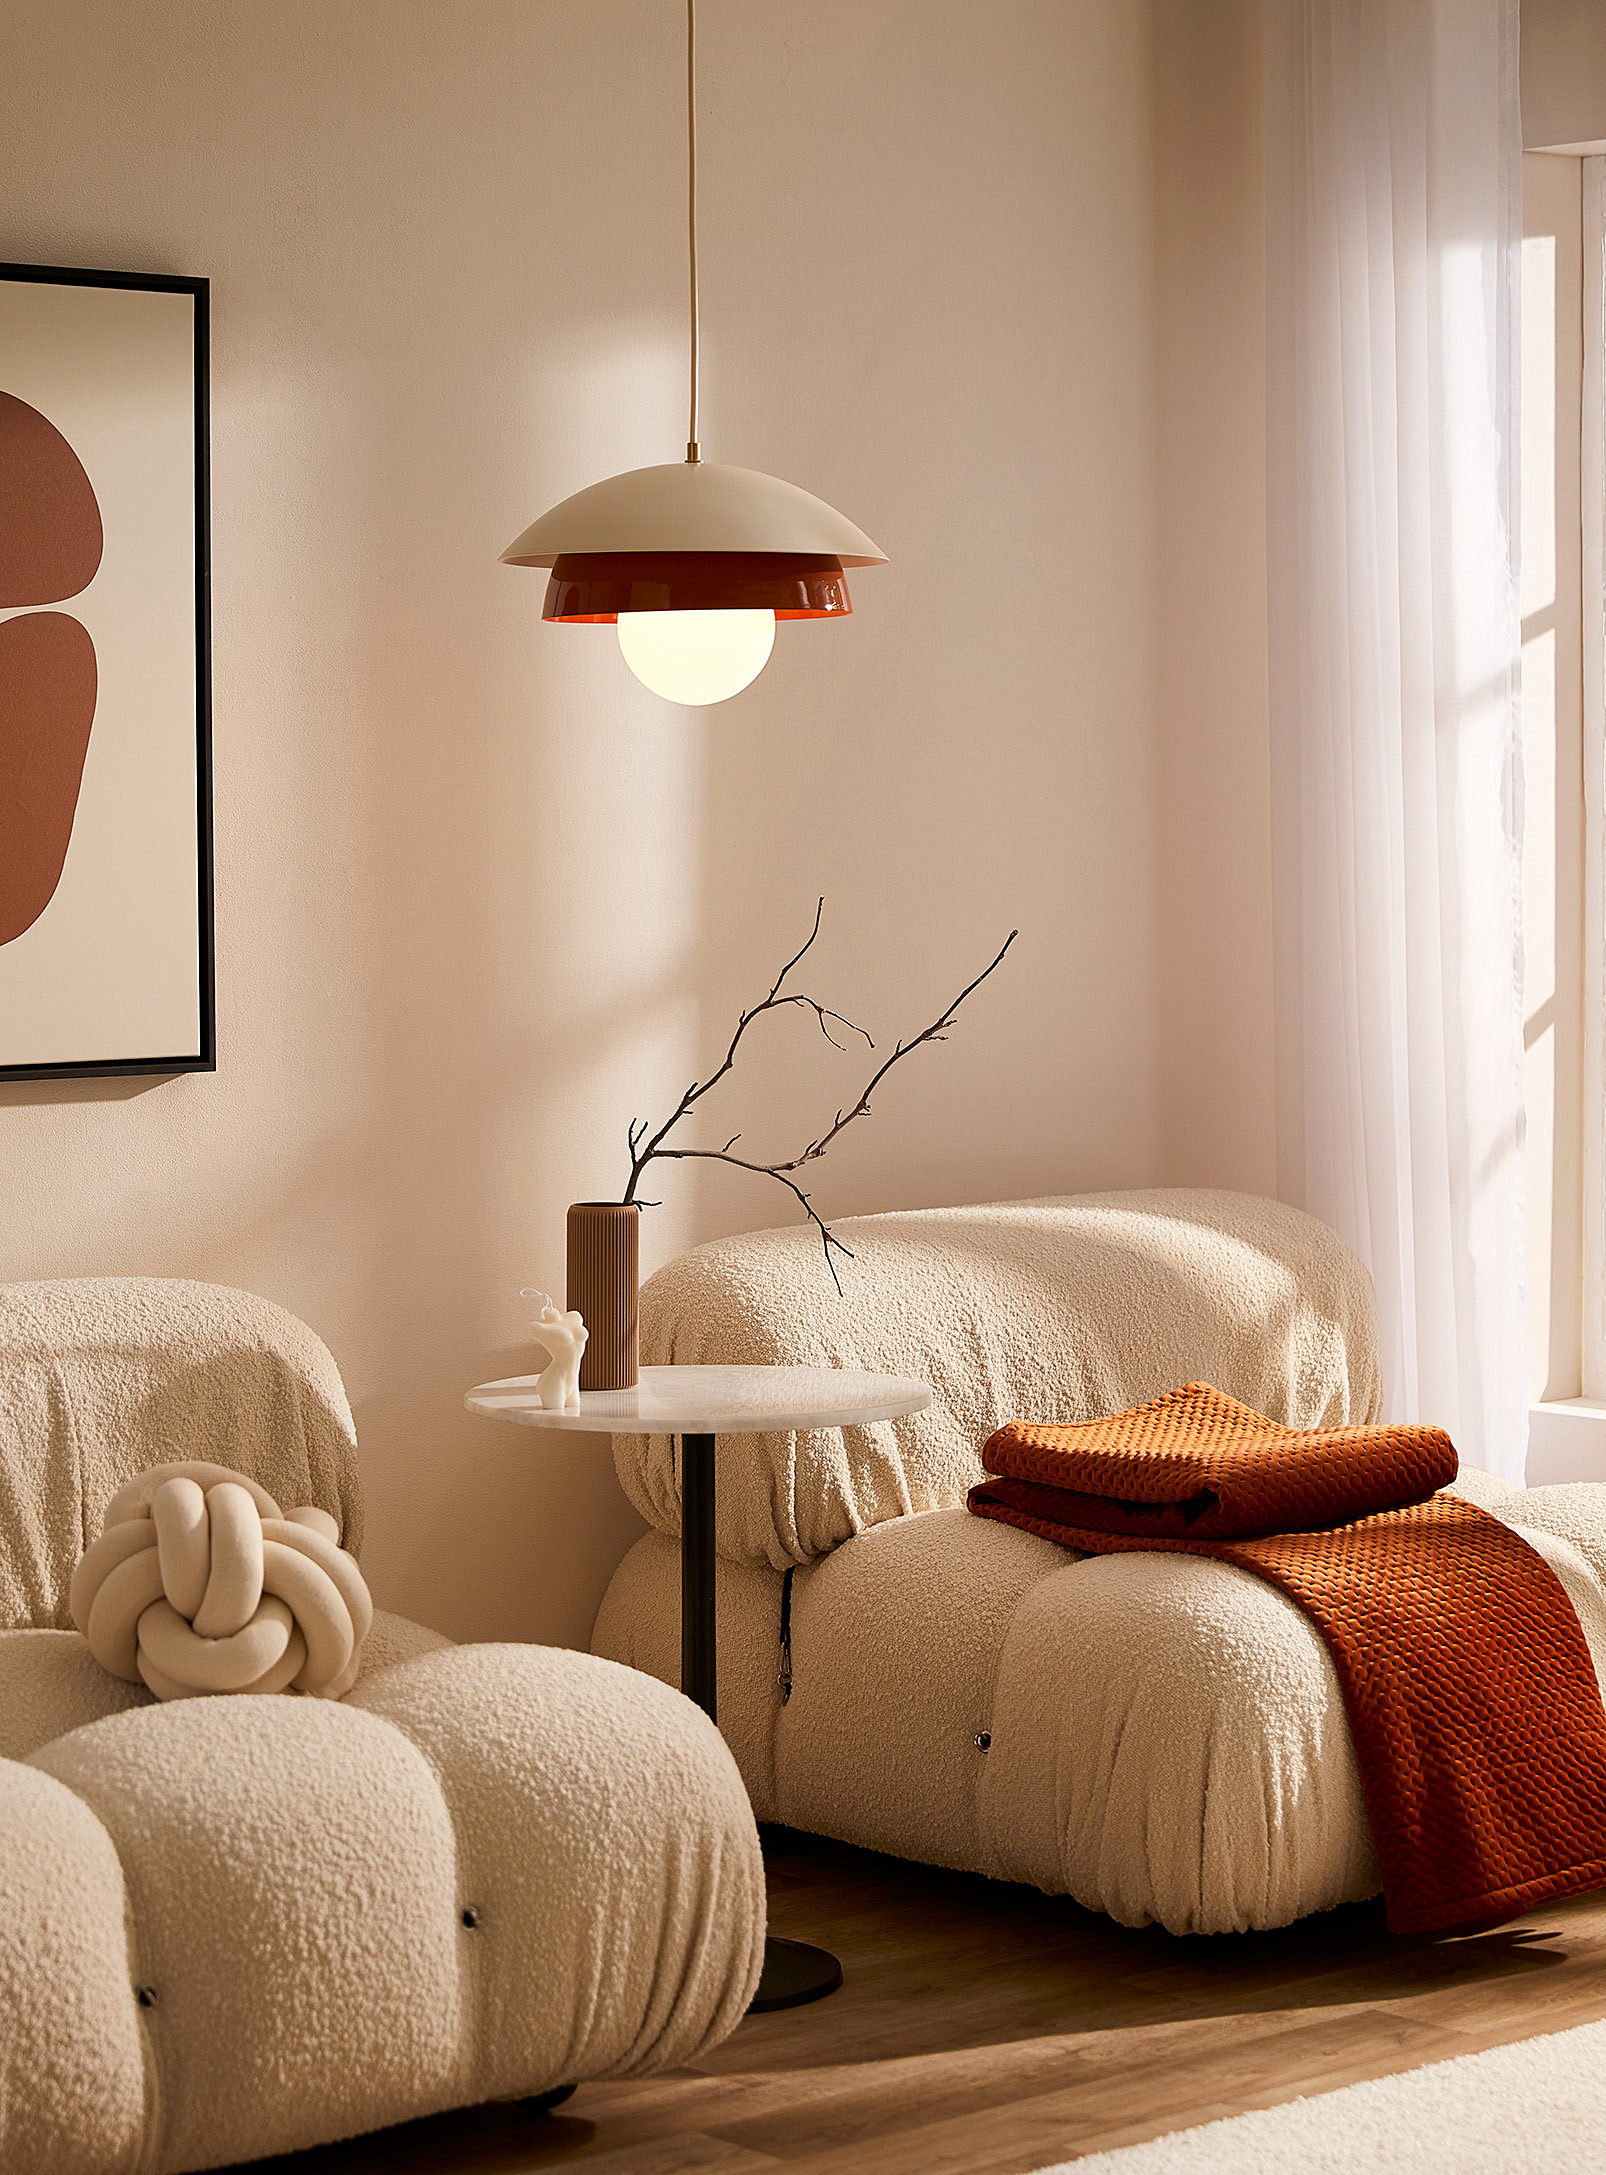 Luminaire Authentik Large Finlandaise Hanging Lamp In Patterned Orange